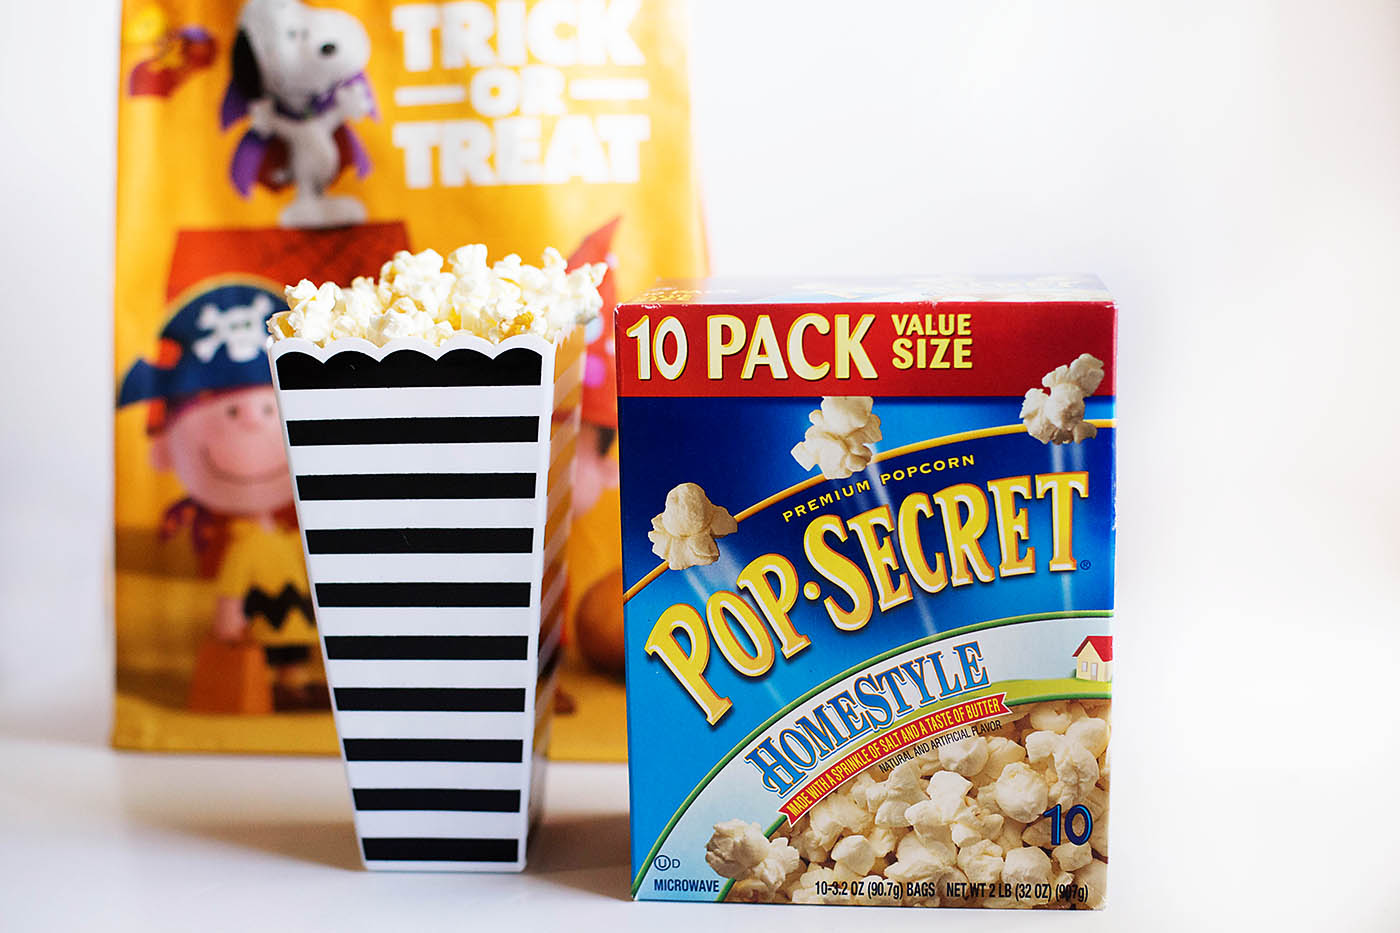 Free Peanuts Movie trick or treat bag at Albertsons or Safeway!